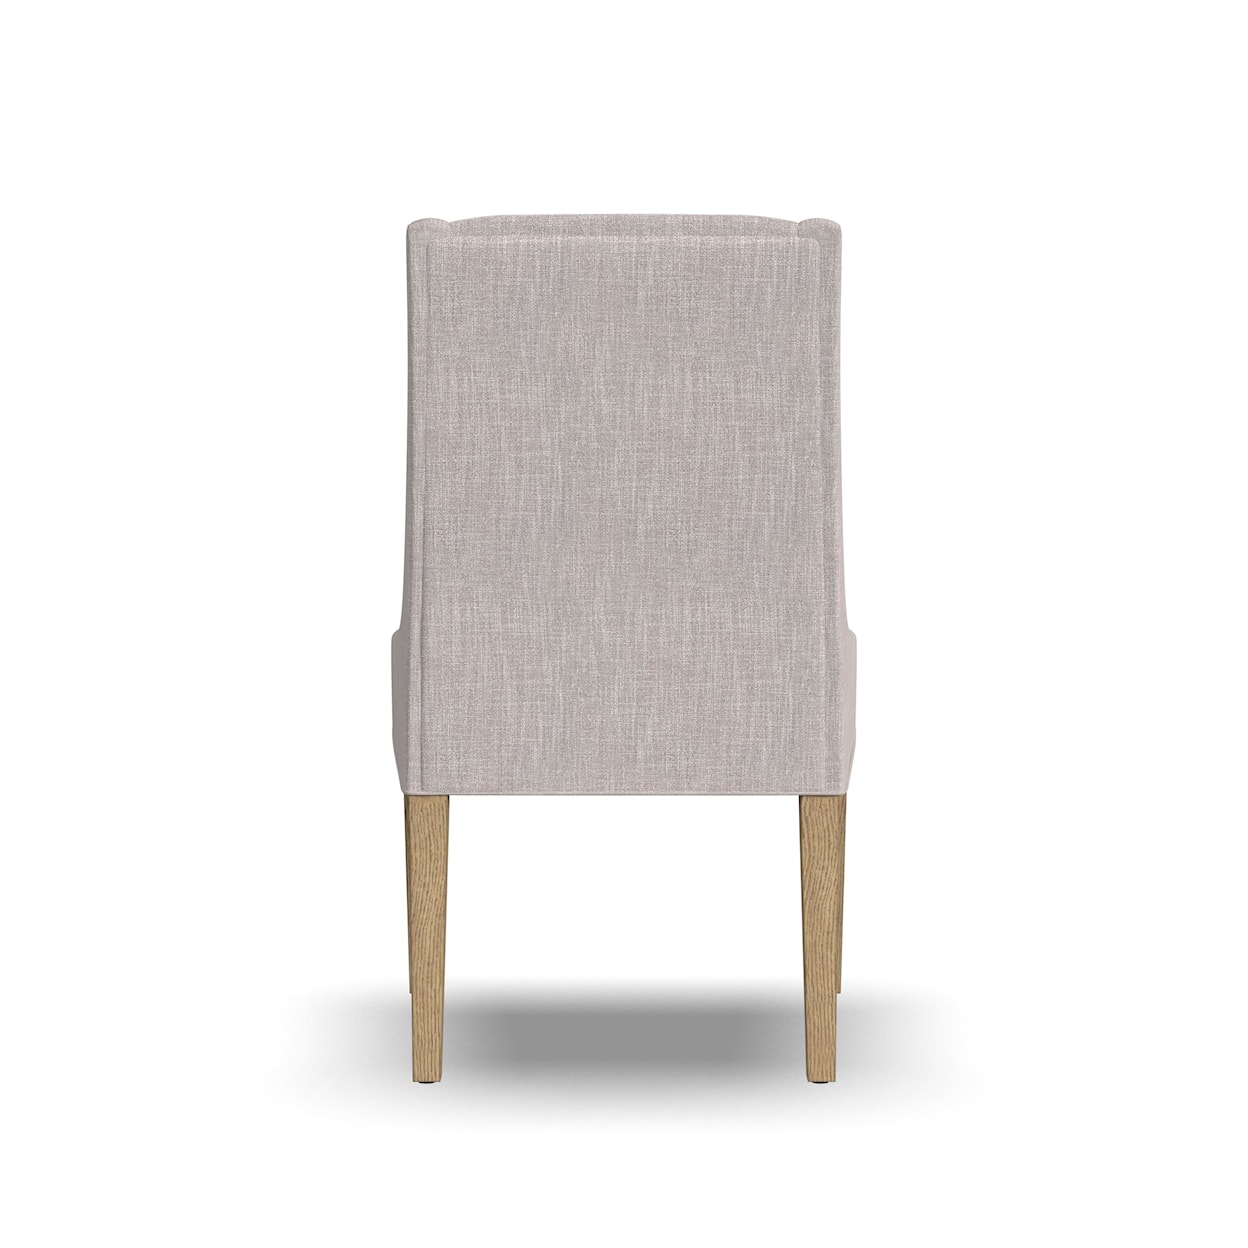 Flexsteel Casegoods Lattice Upholstered Dining Chair